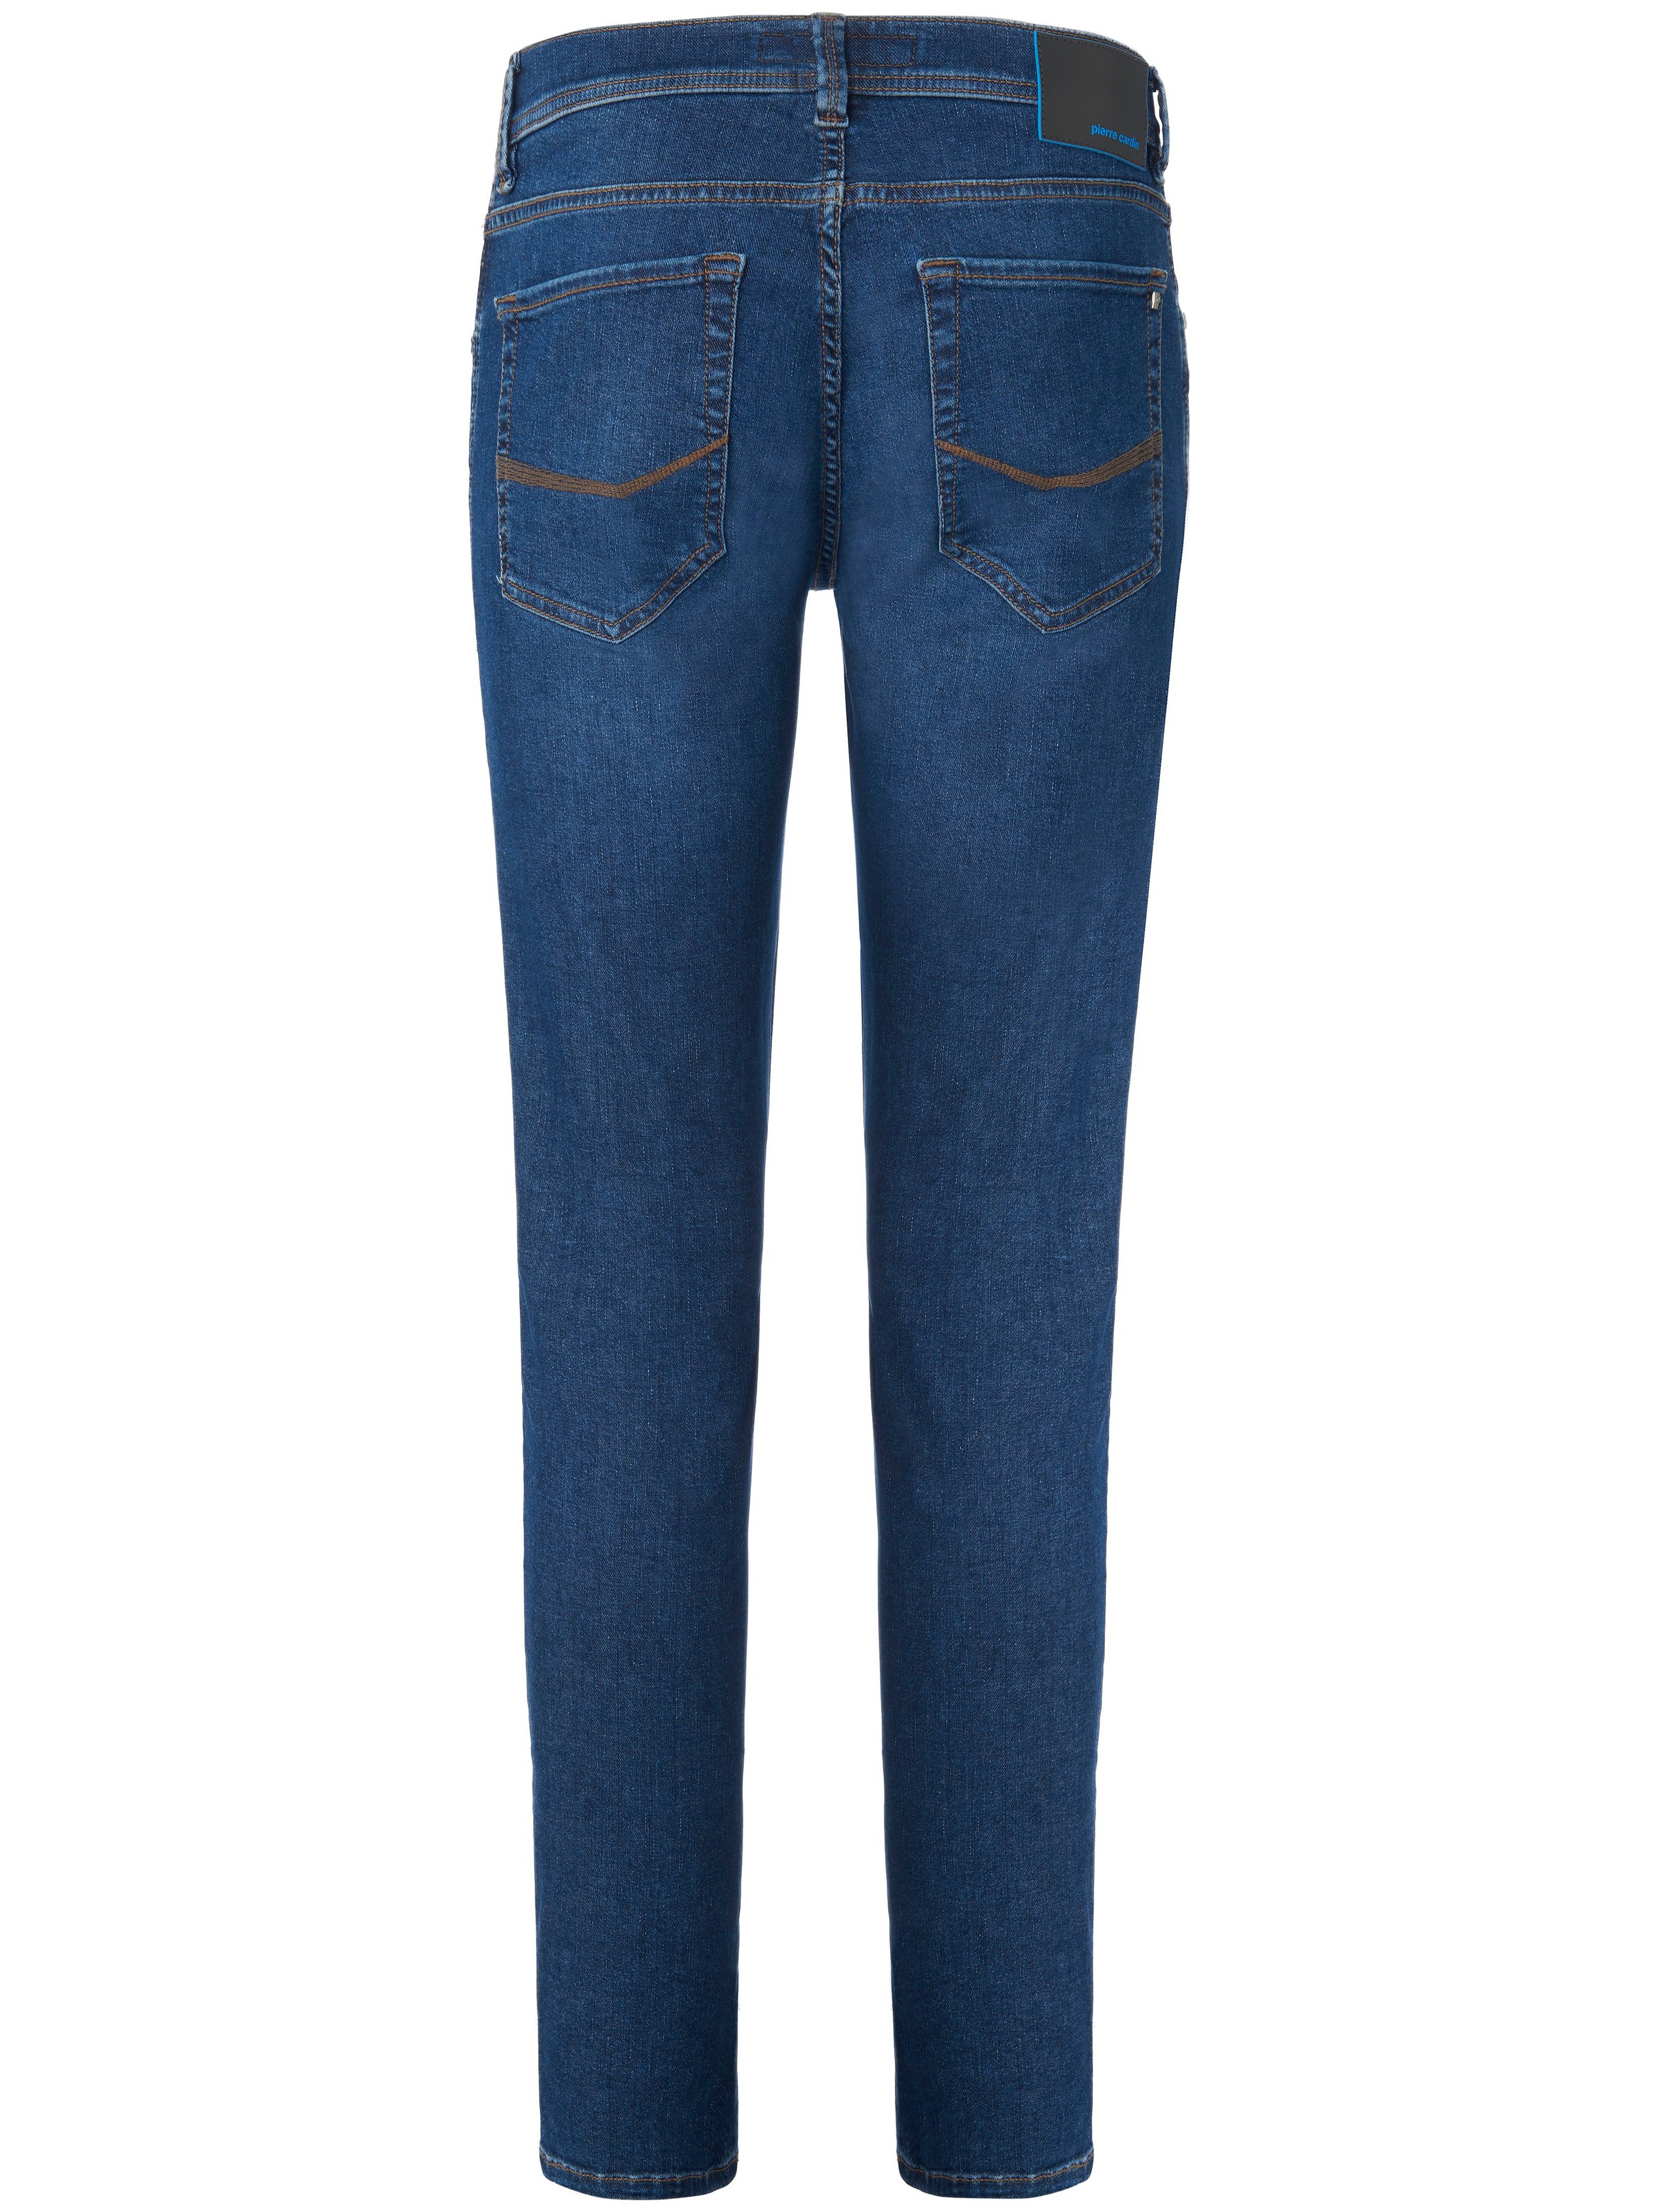 Jeans model Lyon Tapered Fra Pierre Cardin denim